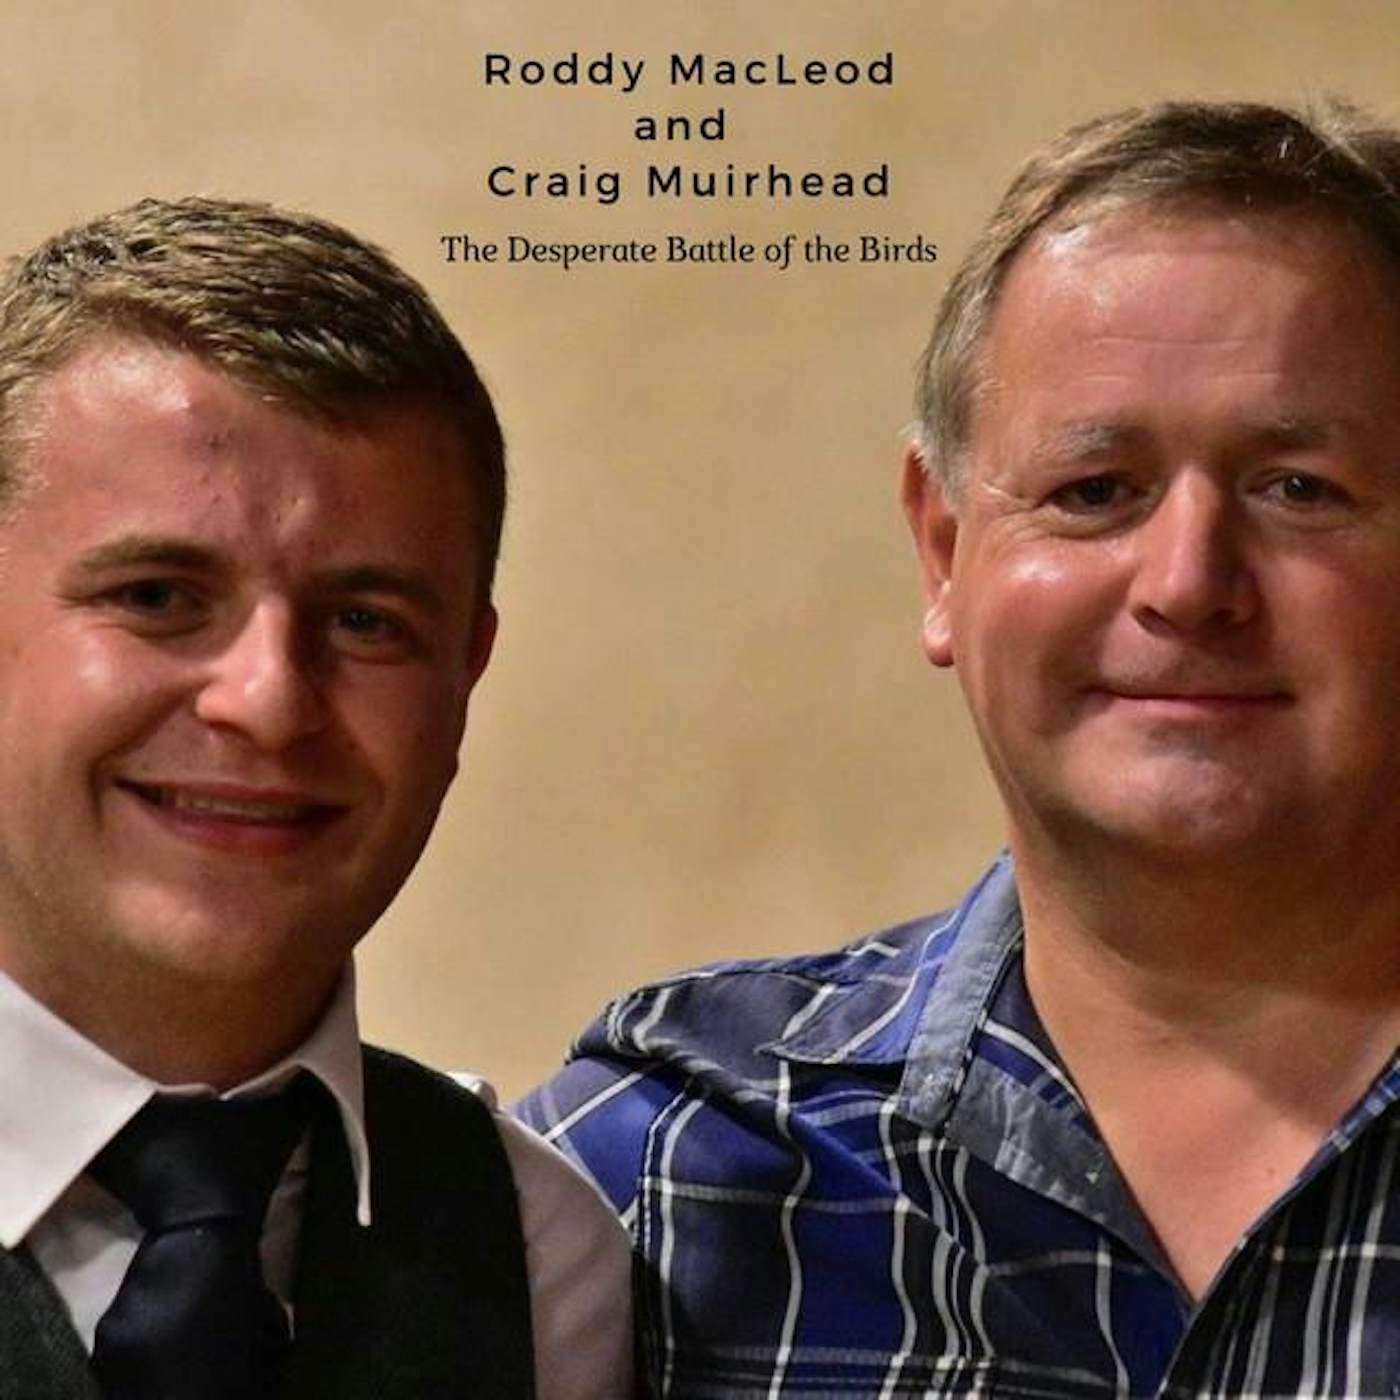 Roddy MacLeod